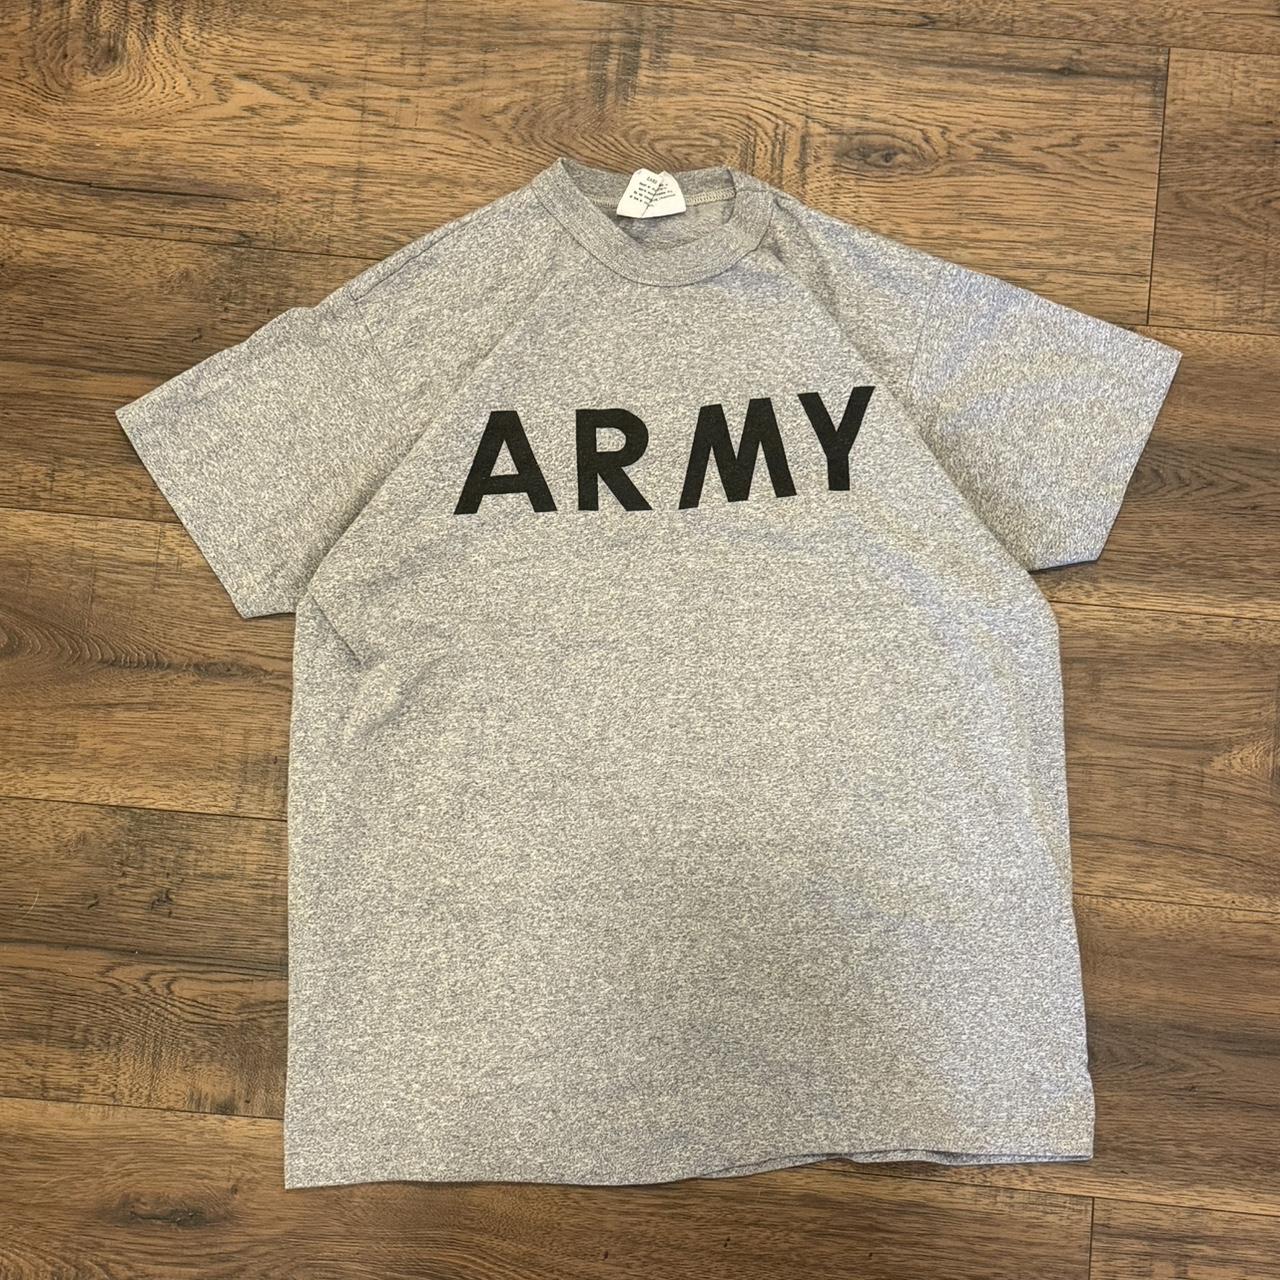 Vintage Army T-Shirt Details - + U.S. army issue... - Depop